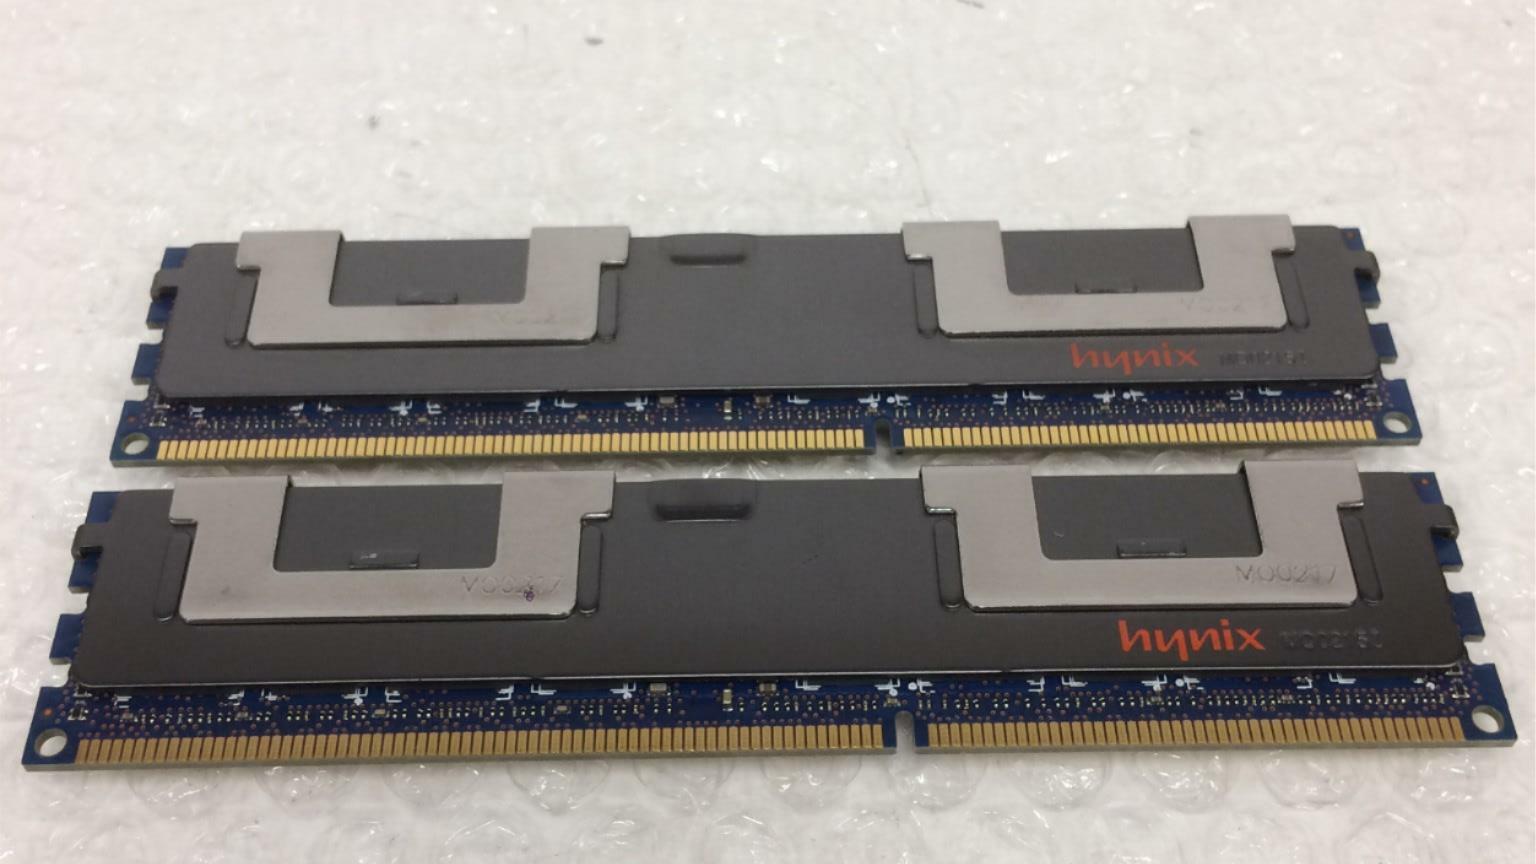 Hynix 8GB 2x4GB DIMM 1333MHz PC3 DDR3 ECC SD RAM Server Memory HMT151R7BFR4C-H9